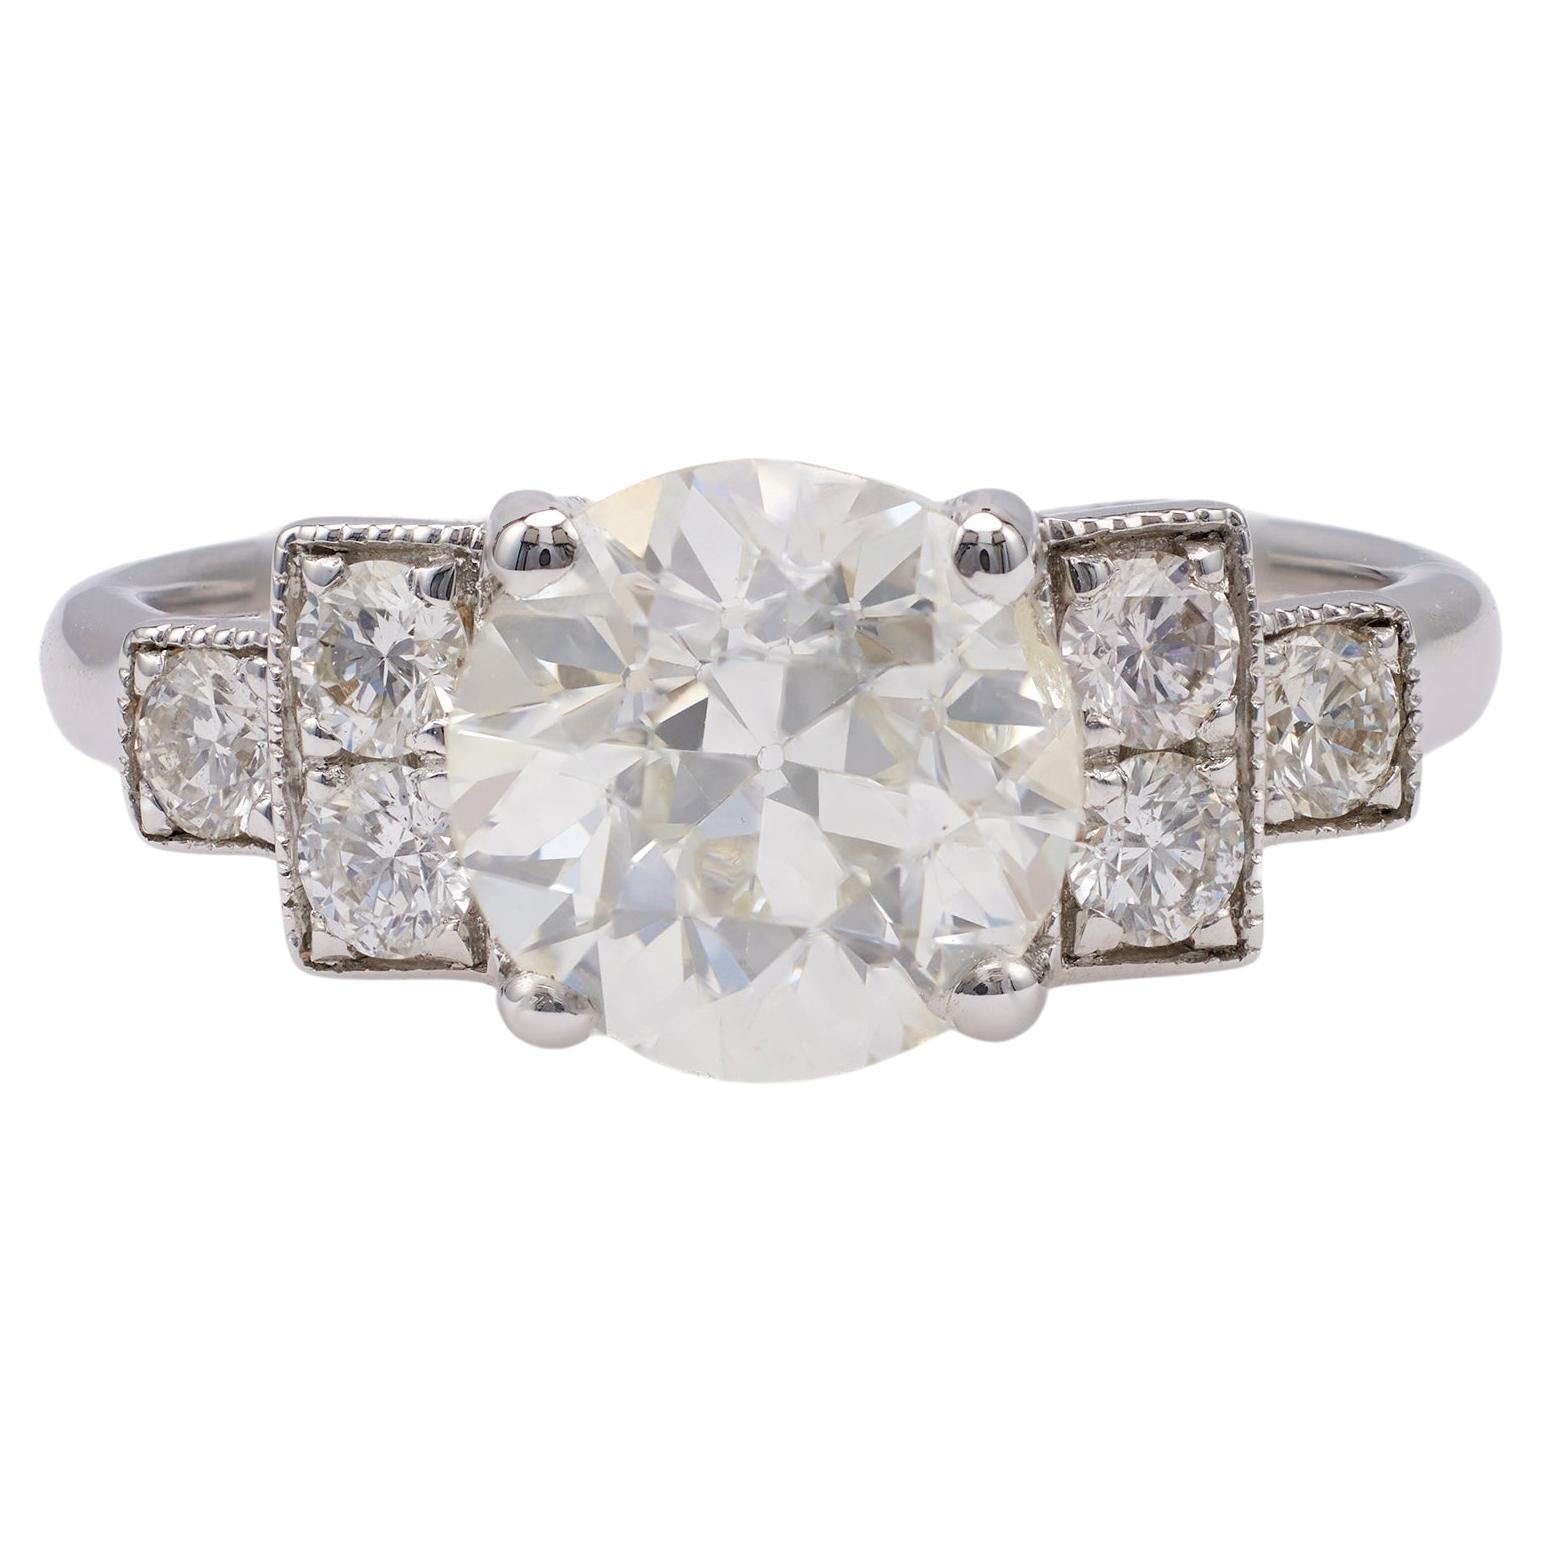 Art Deco Inspired GIA 2.21 Carat Old European Cut Diamond 18k White Gold Ring